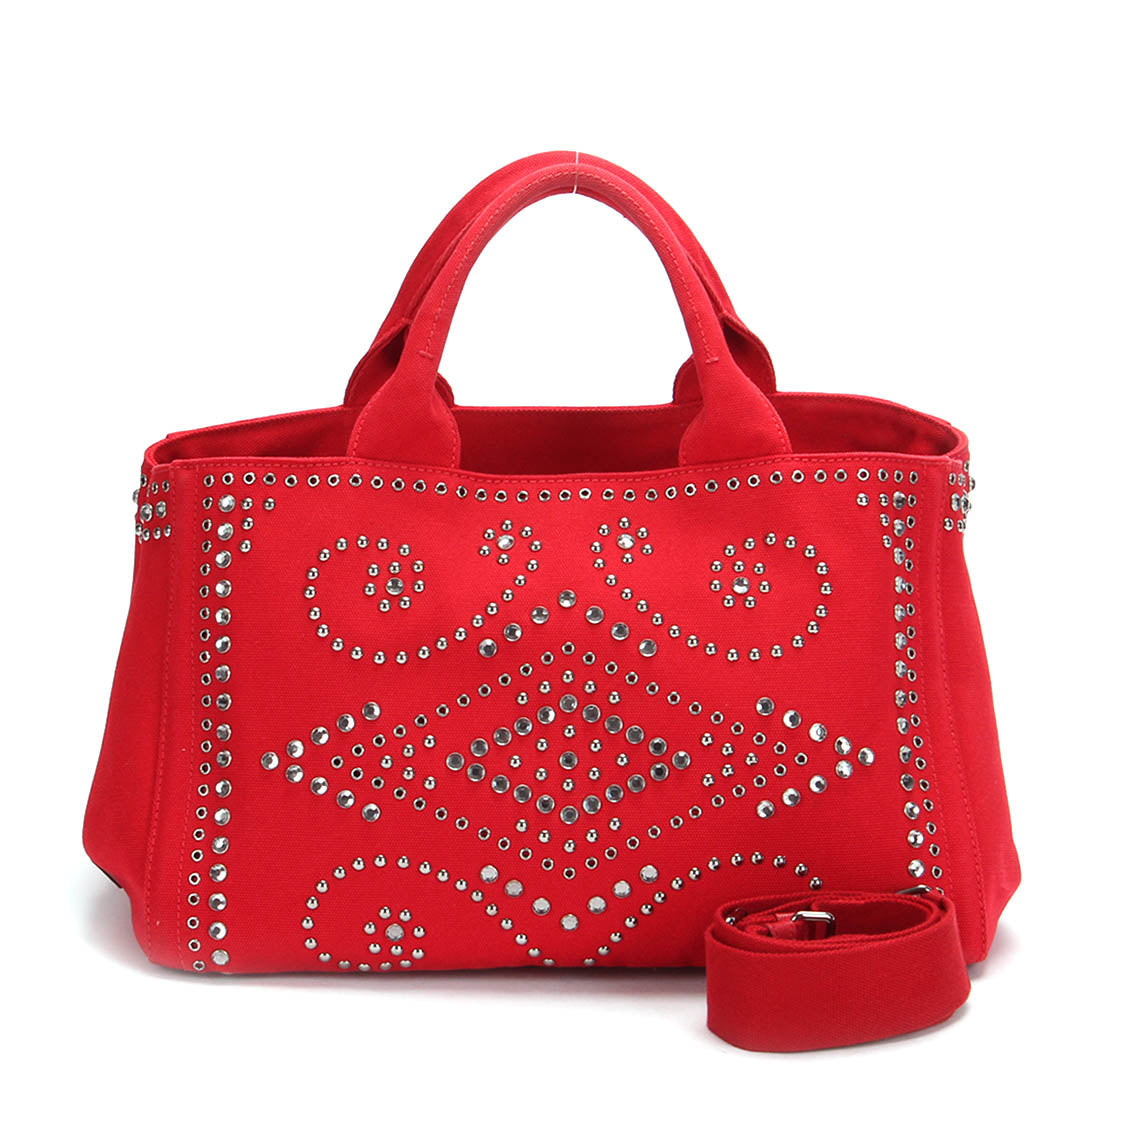 Embellished Canapa Tote Bag